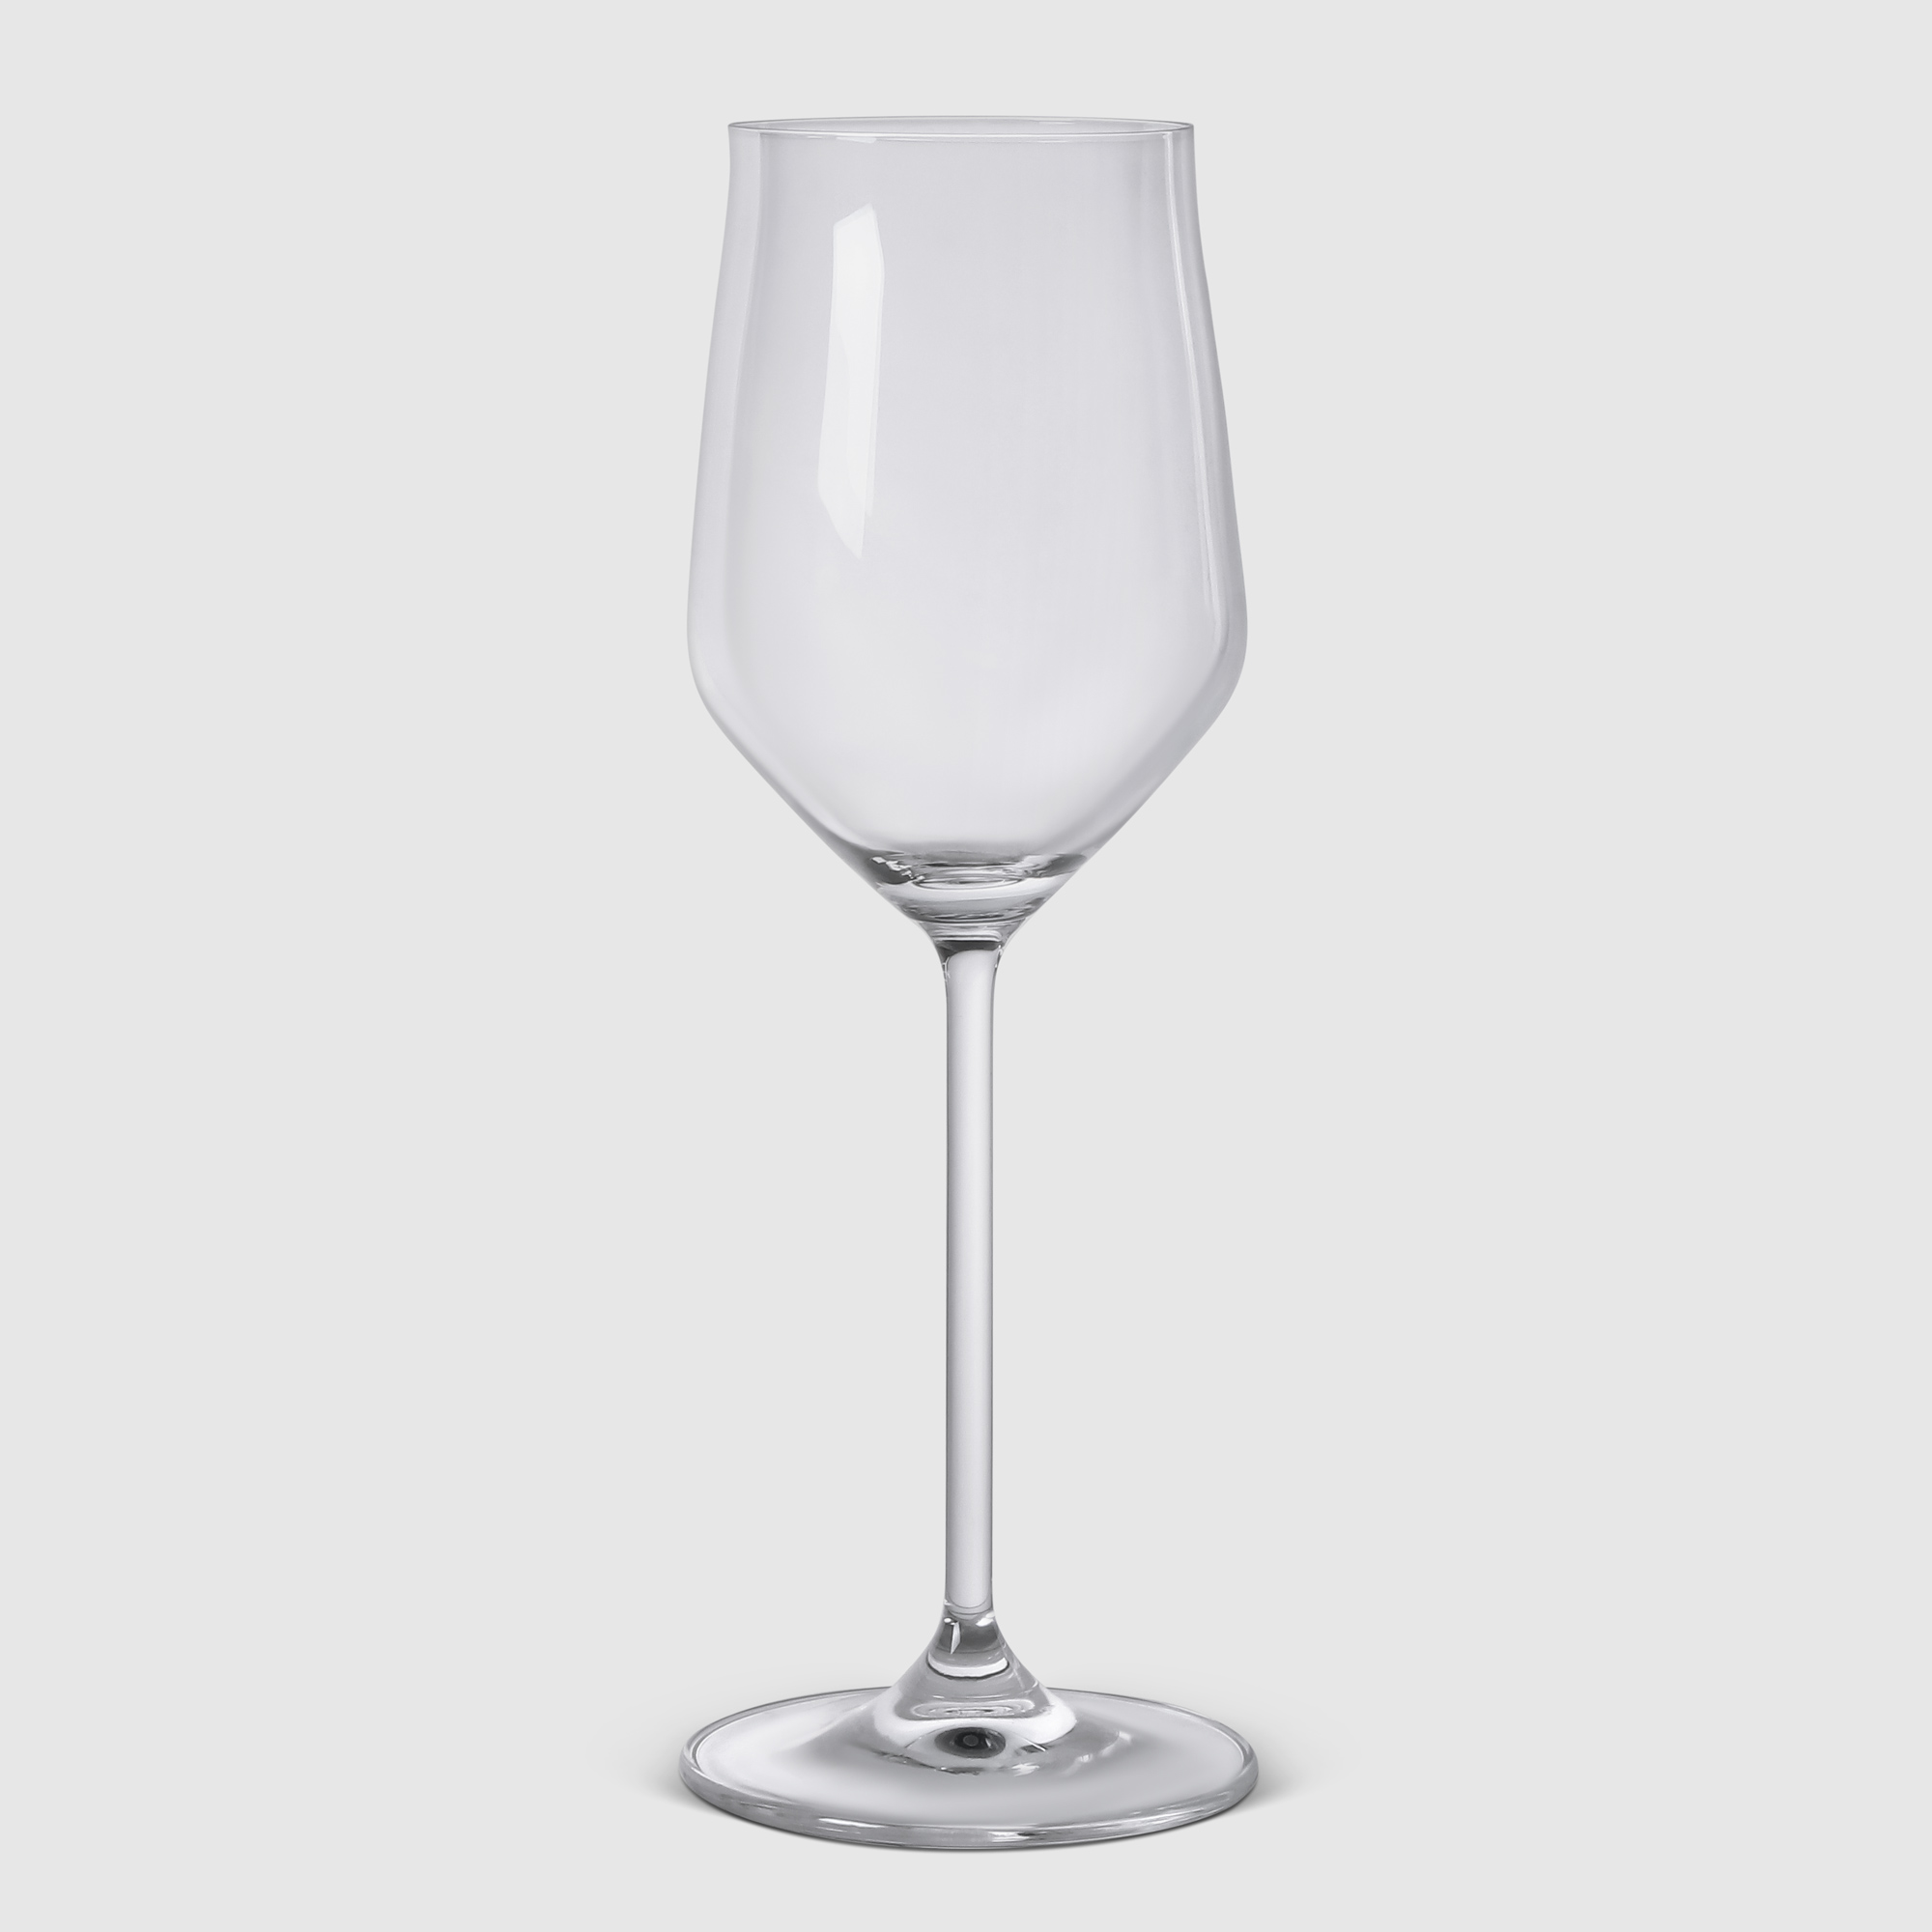 Бокал Wittkemper 10296700 для белого вина mersada ремень бокал вина